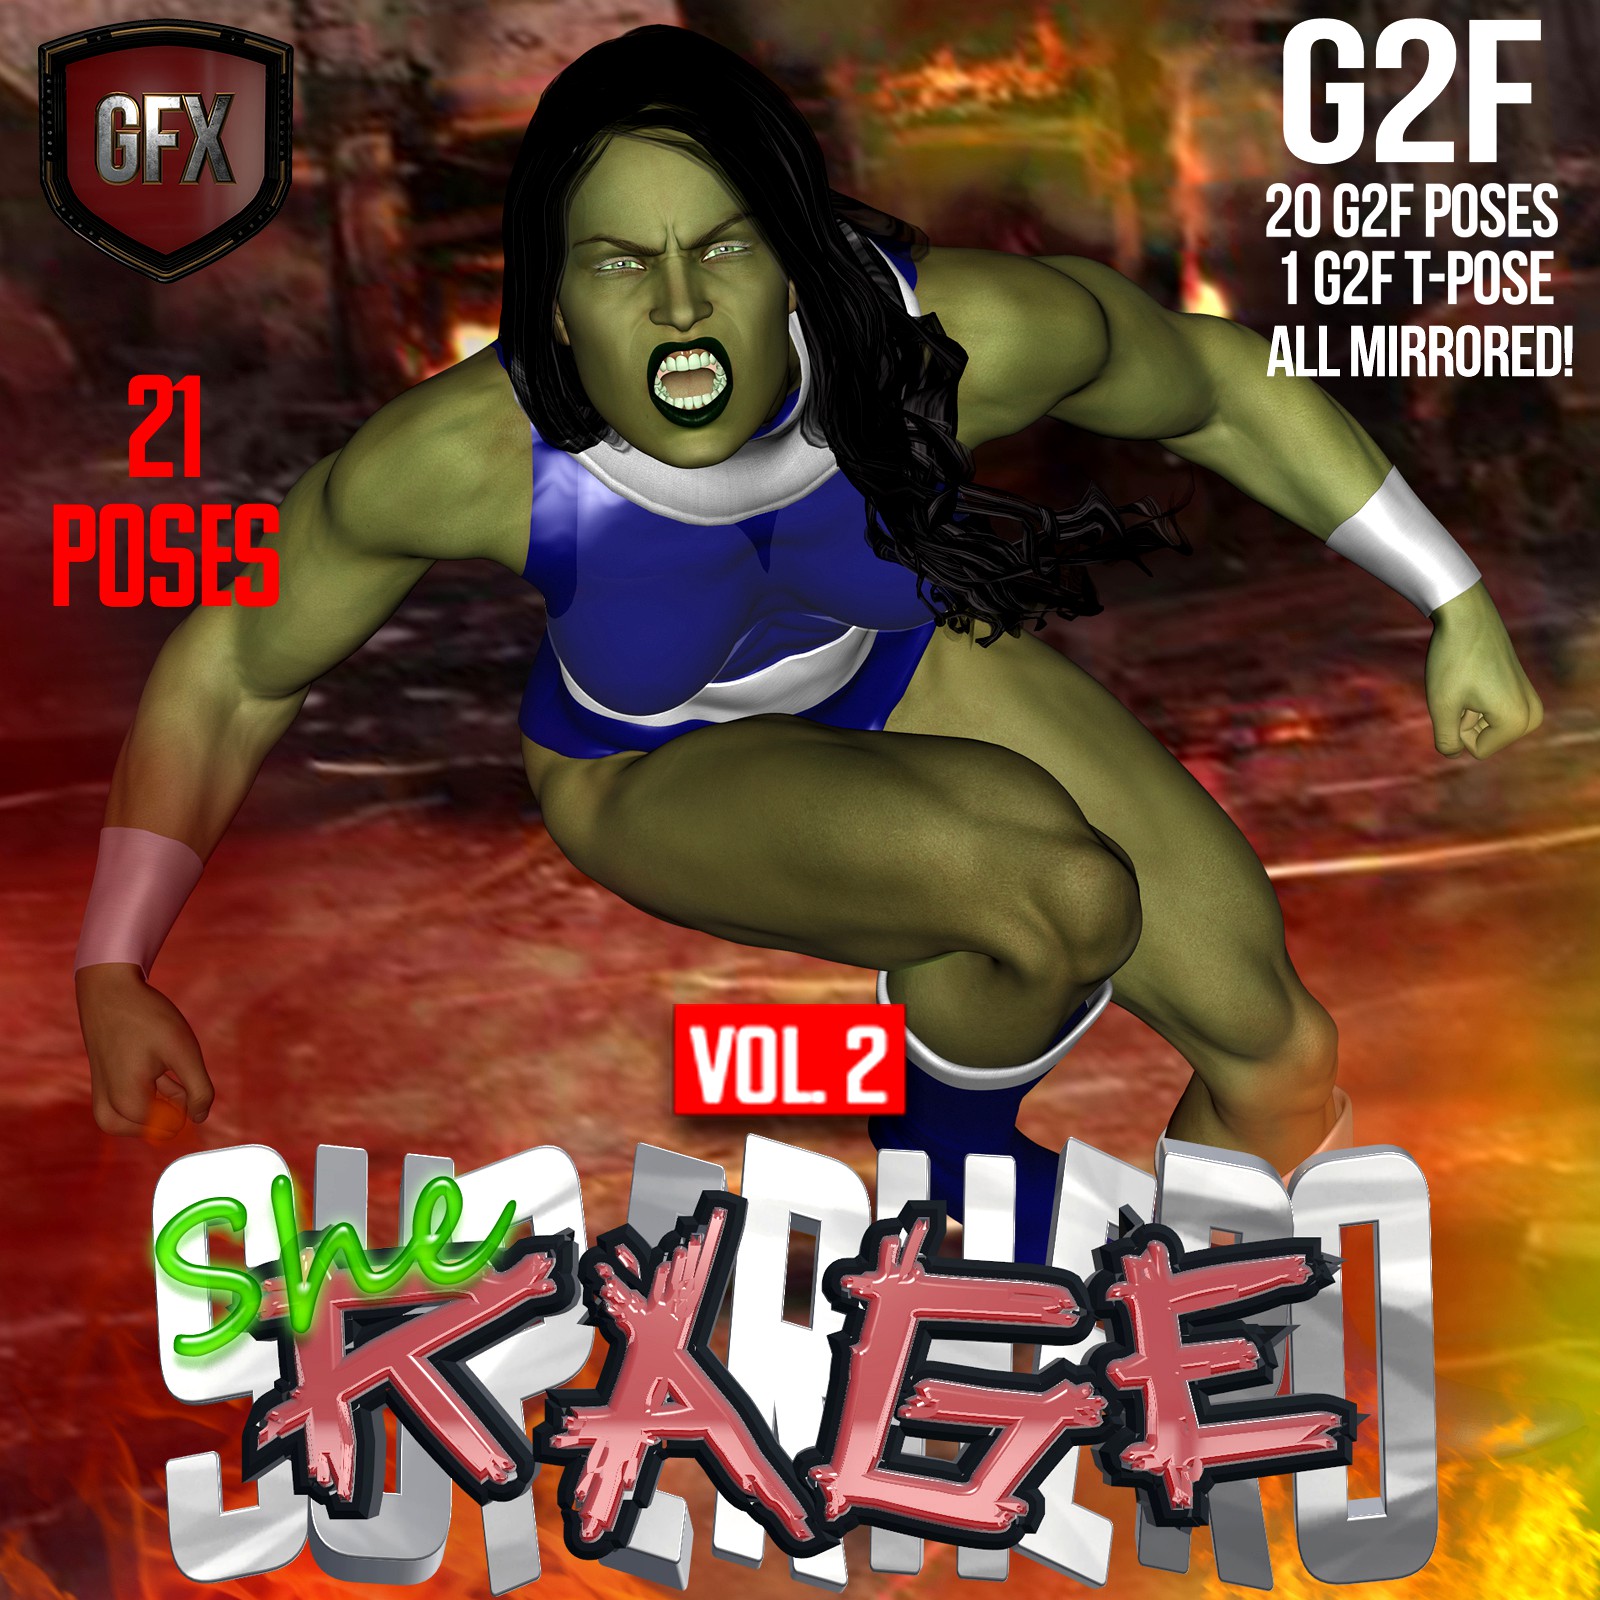 SuperHero She-Rage for G2F Volume 2